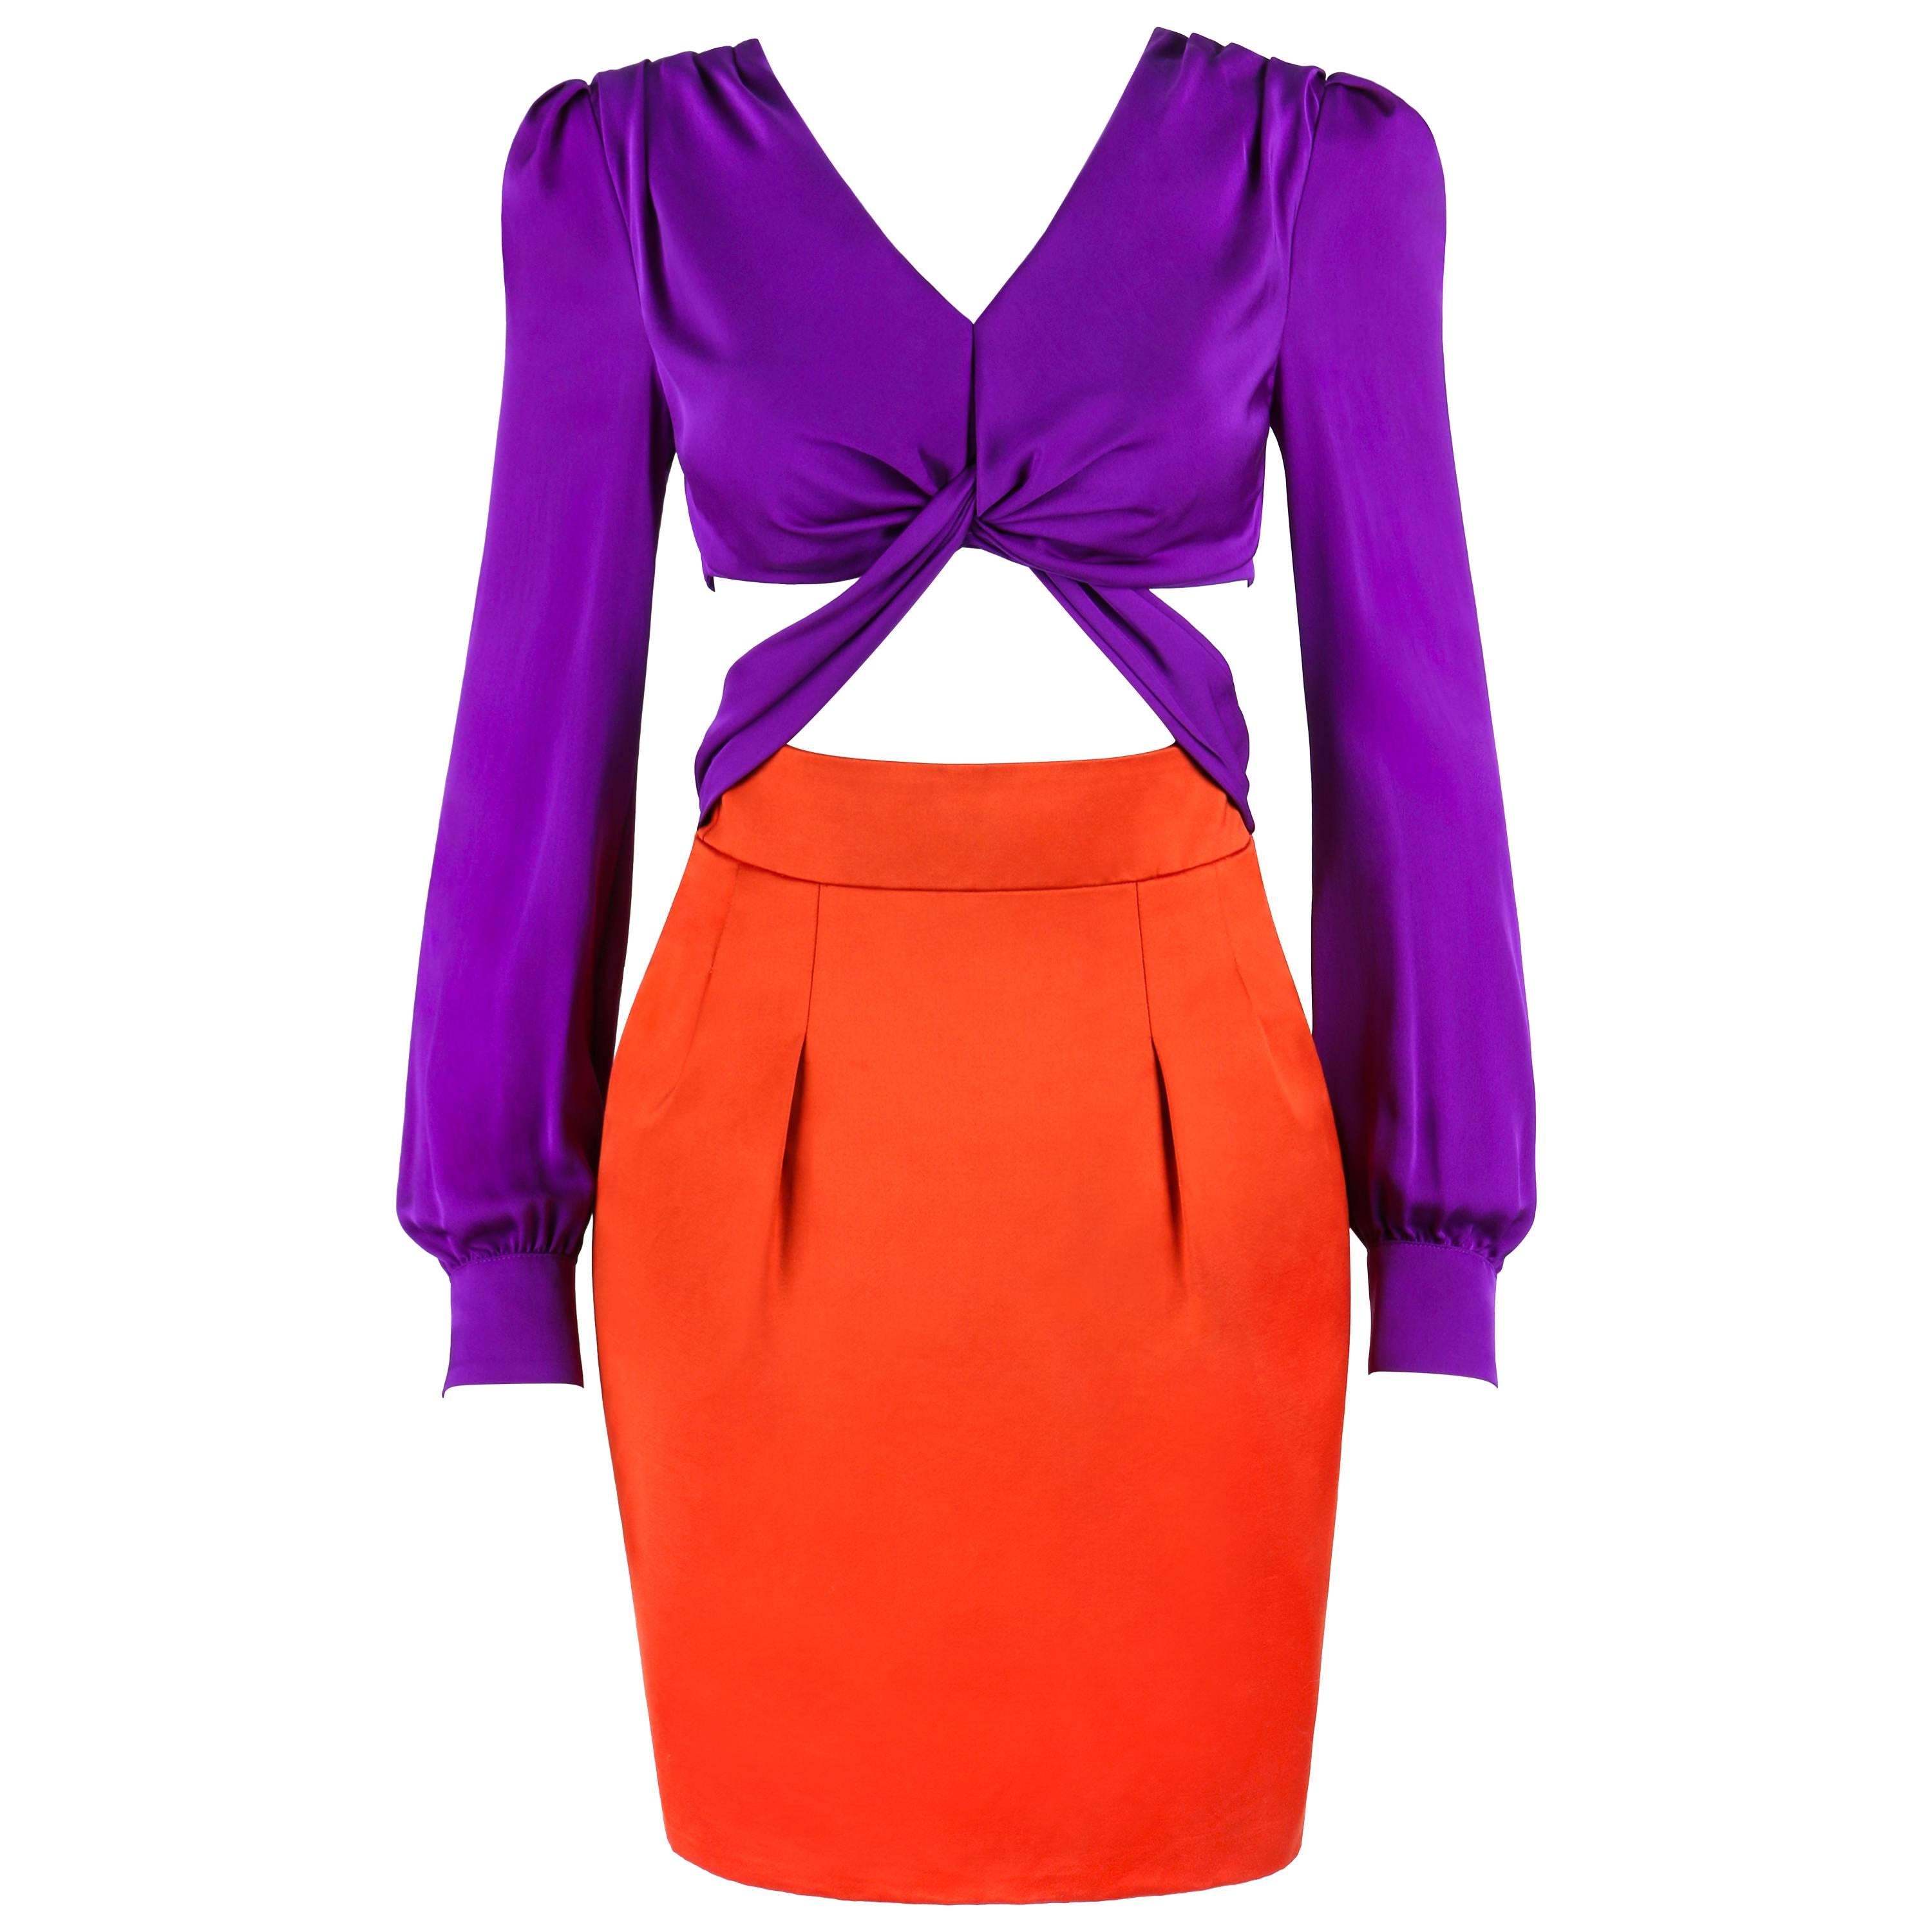 GUCCI S/S 2011 Purple Orange Color Block Knotted Midriff Cutout Cocktail Dress